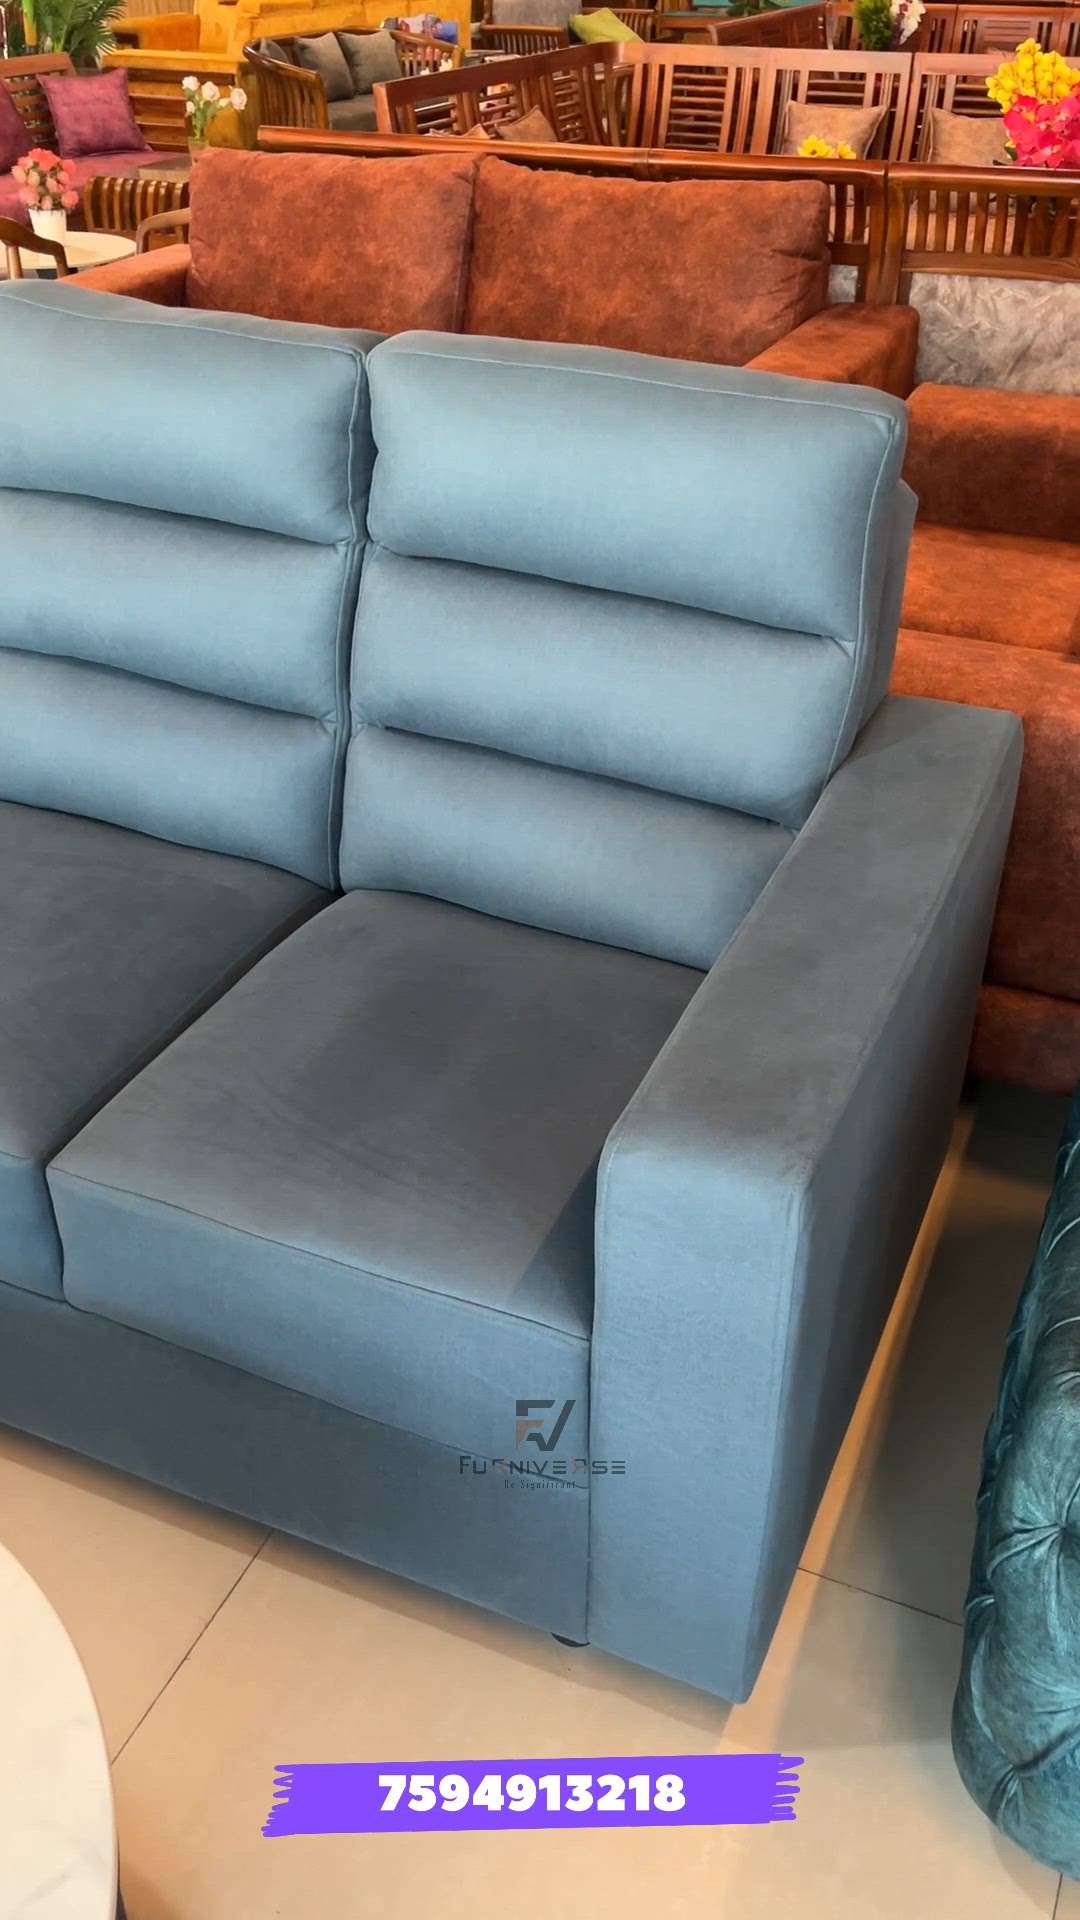 New Premium Sofa👍
7594913218
  #furnitures  #HomeDecor  #furnituremanufacturer  #Palakkad #kerala